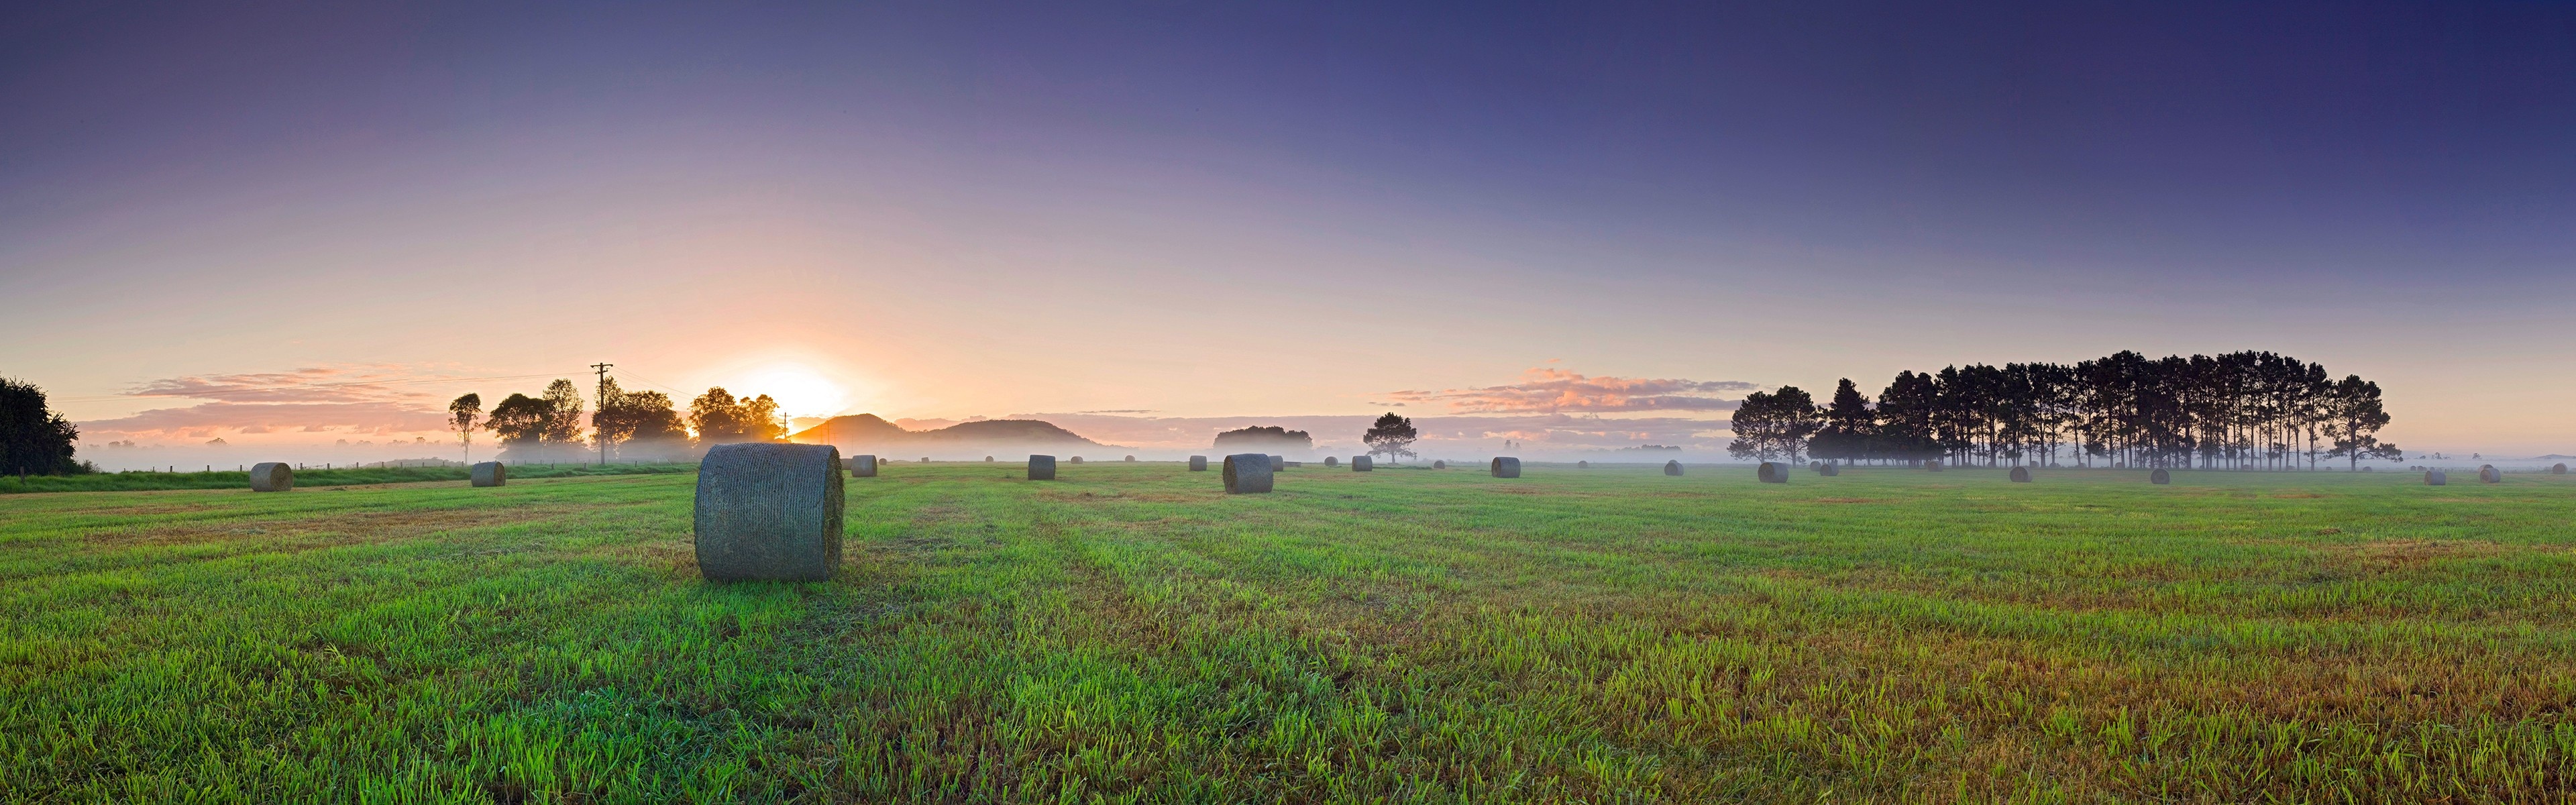 Grassland: Nature, Field, Mist, Horizon, Panorama, Haystacks, Dawn, Agriculture, Meadow, Plain, Prairie, Rural area. 3840x1200 Dual Screen Background.